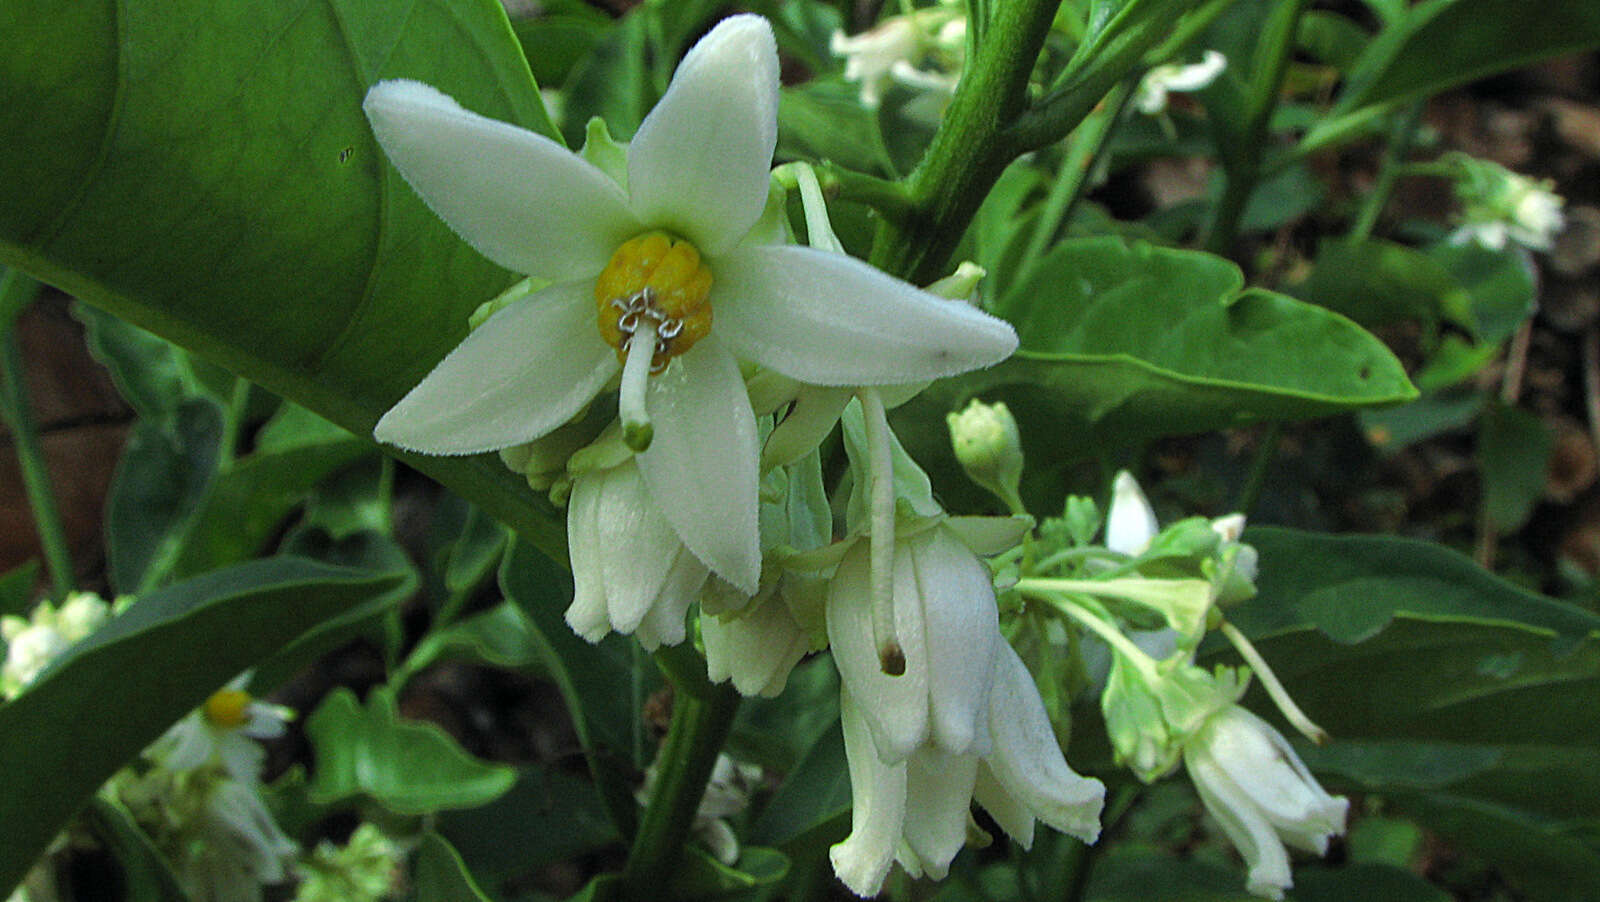 Image of Solanum warmingii Hiern